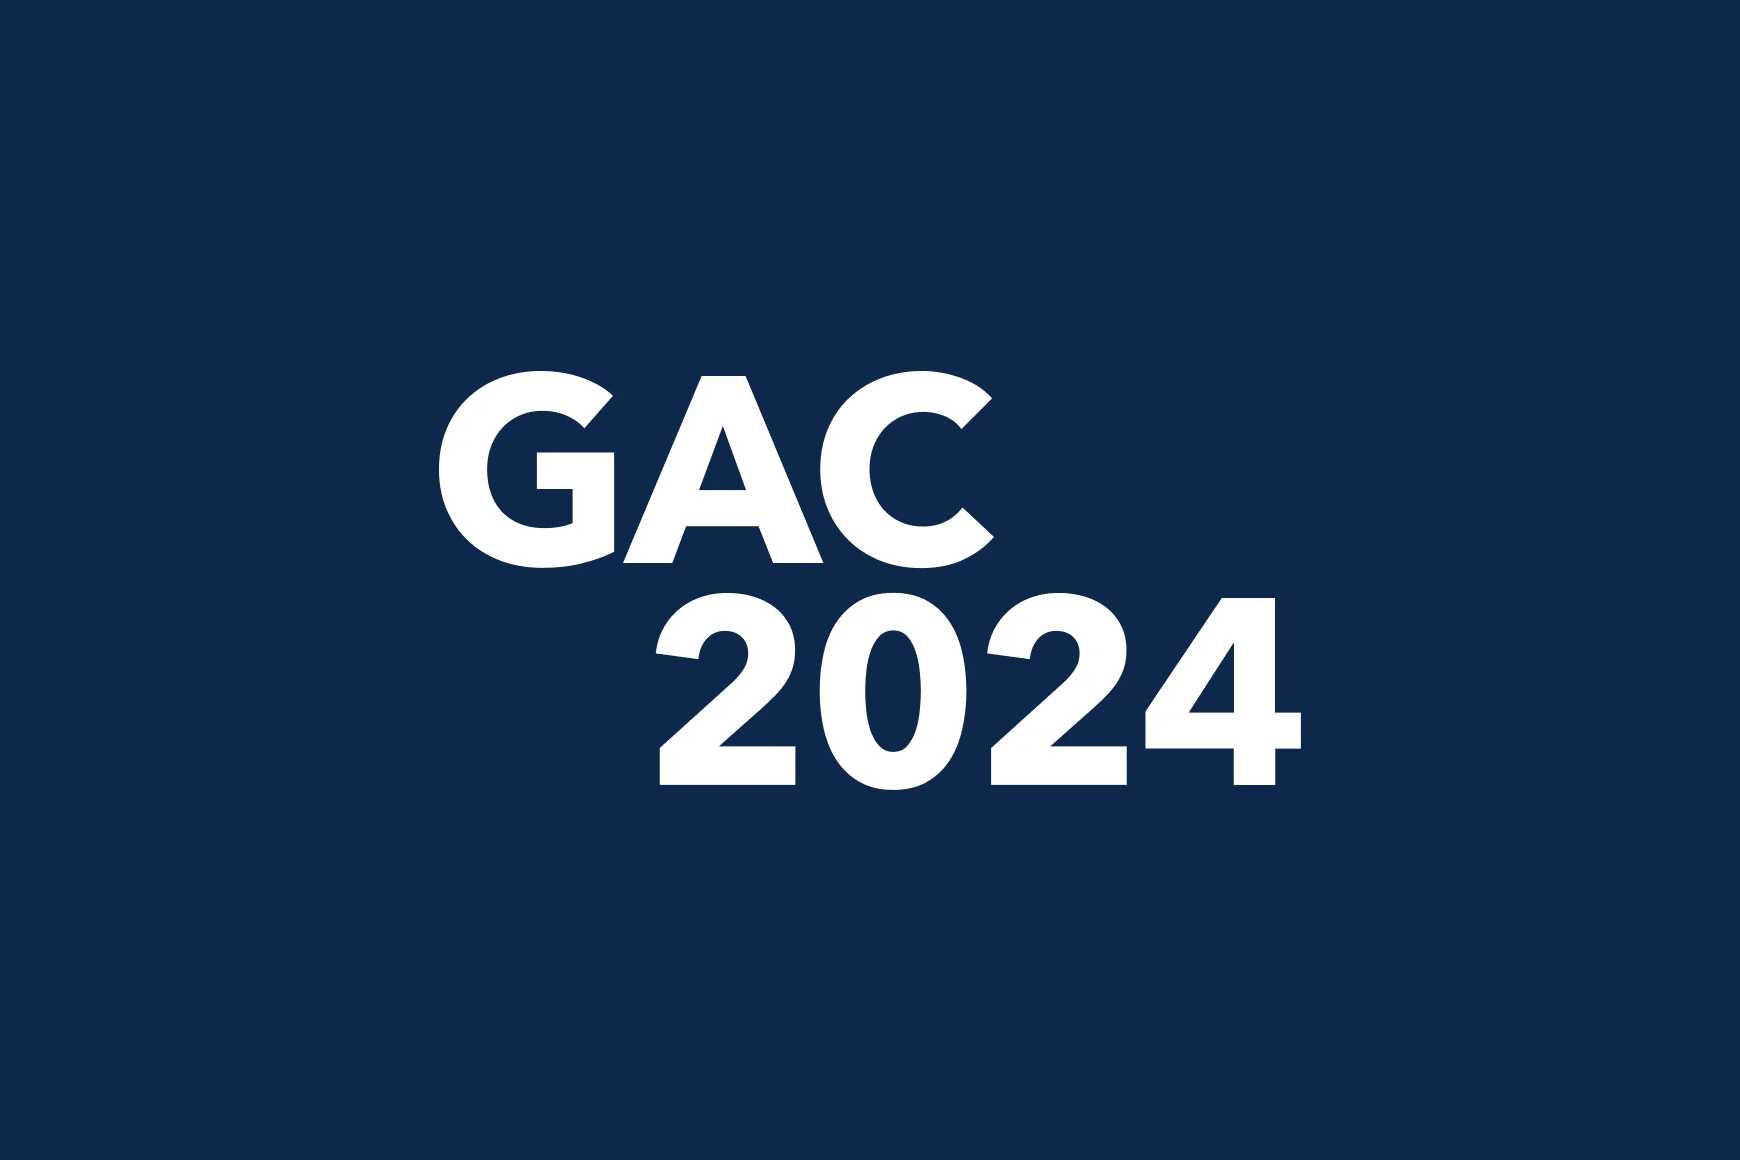 America’s Credit Unions GAC 2024